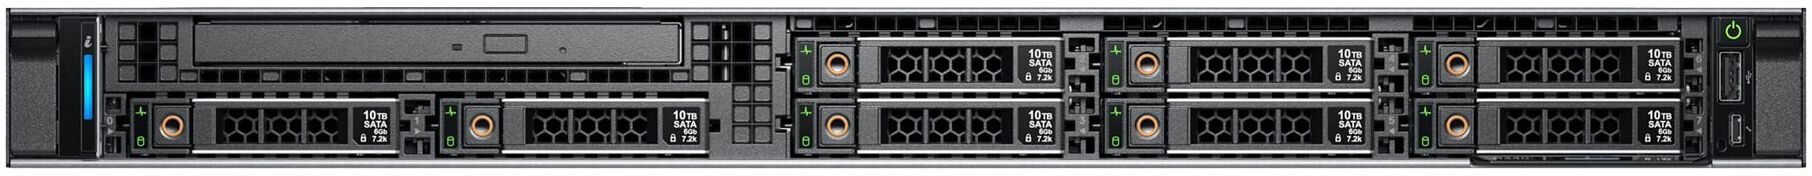 Сервер Dell PowerEdge R340 (8x2.5quot;), E-2224 (3.40GHz, 8M, 4C, Turbo 71W) , 16GB (1*16GB) 2666 DDR4 UDIMM ECC, PERC H330+, DVD+/-RW SATA Internal, 1.2TB 10K SAS 12Gbps 2.5quot; HP HD, Broadcom 5720 LOM, iDRAC9 Ent, 550W, Bezel, Rails, 3Y NBD